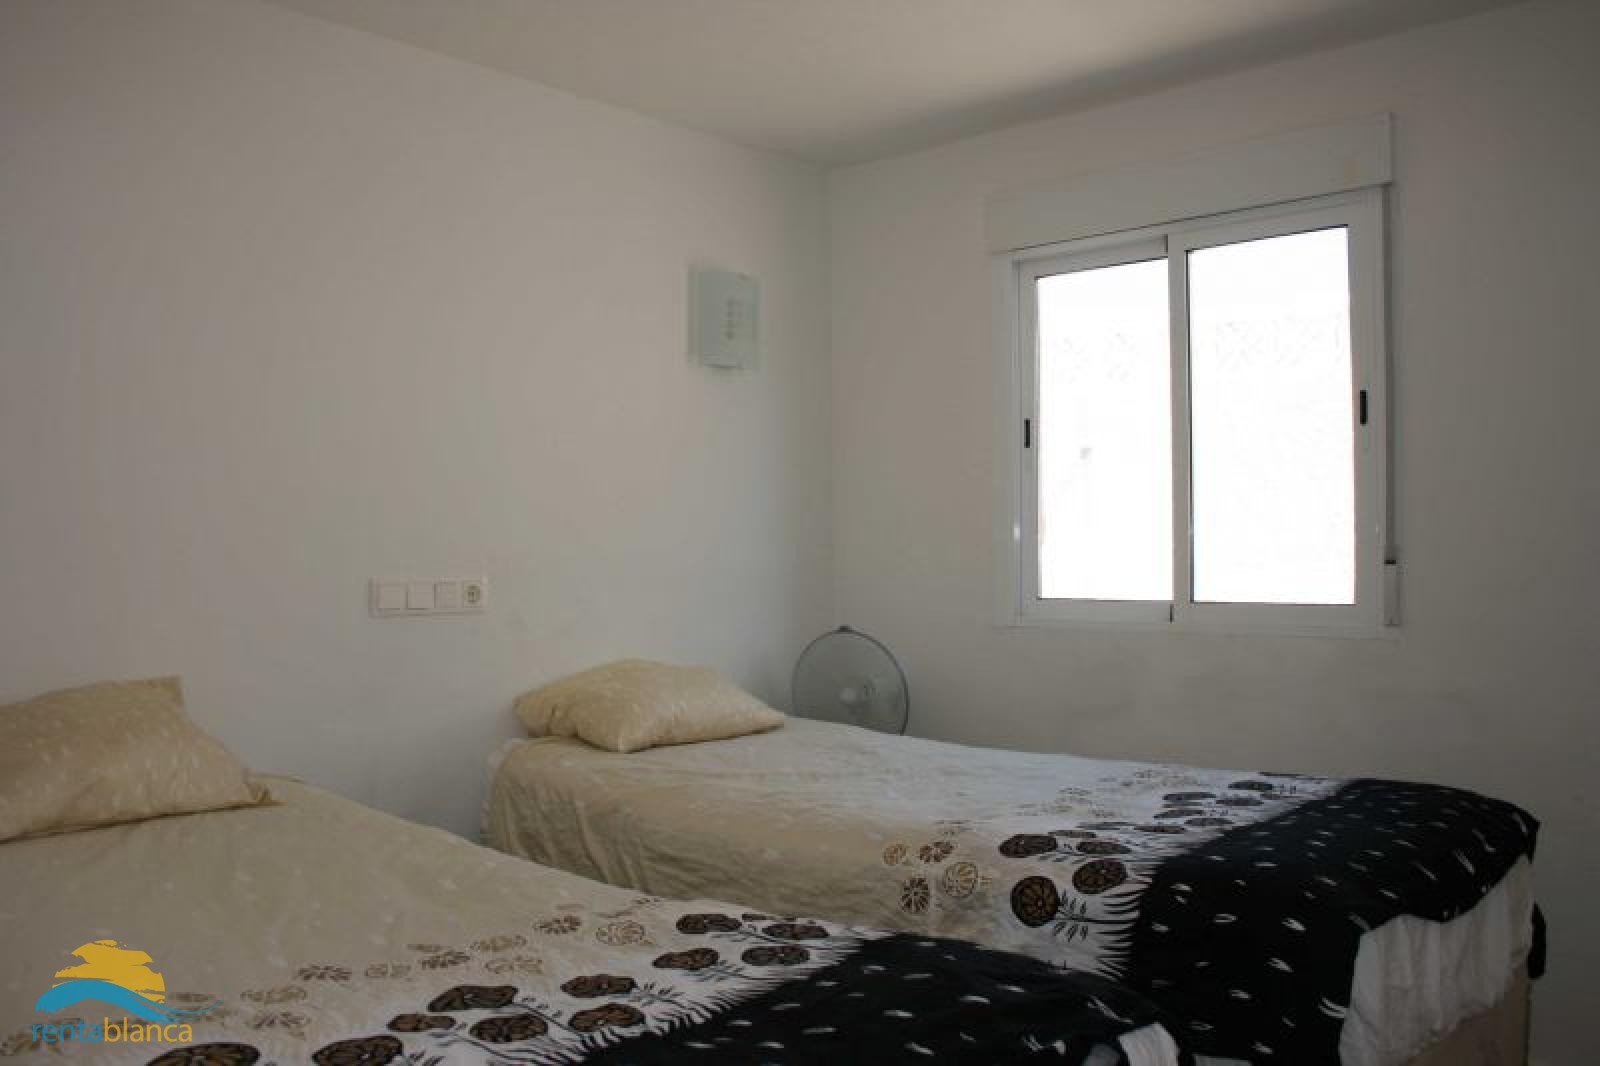 Villa with separate downstairs apartment - Rentablanca